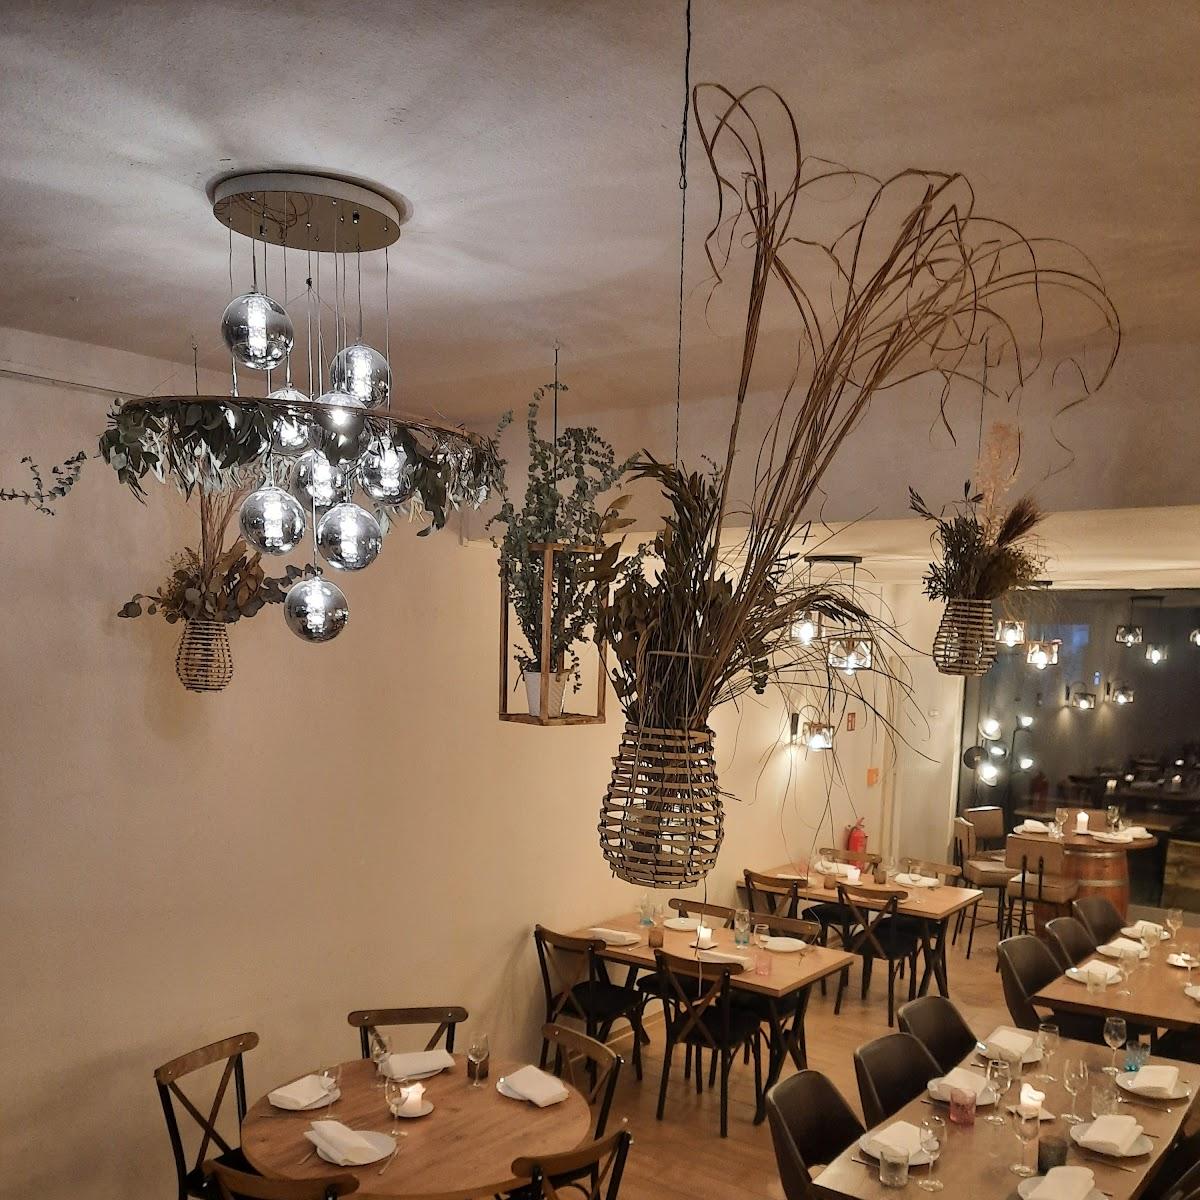 Restaurant "LaMaddalena" in Oberhausen